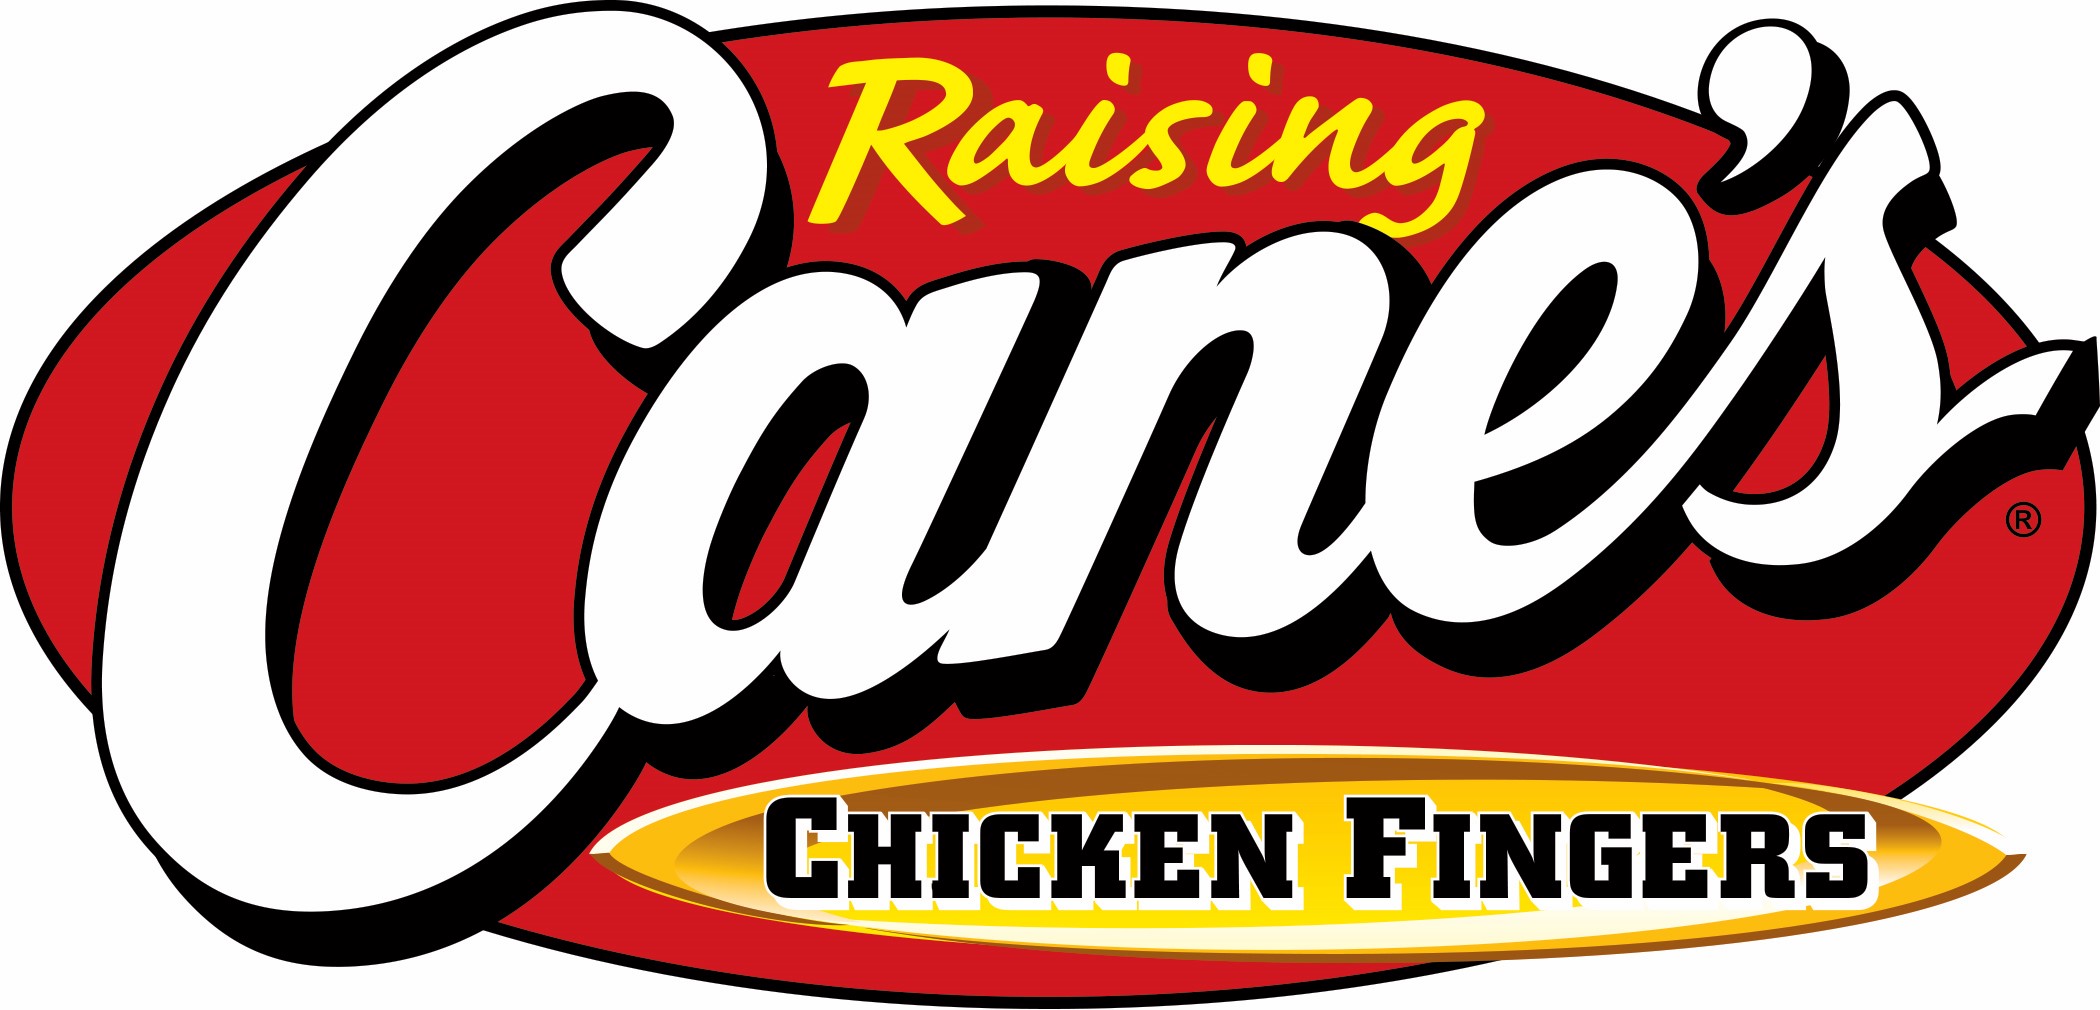 Raising Cane's Chicken Fingers - Custer